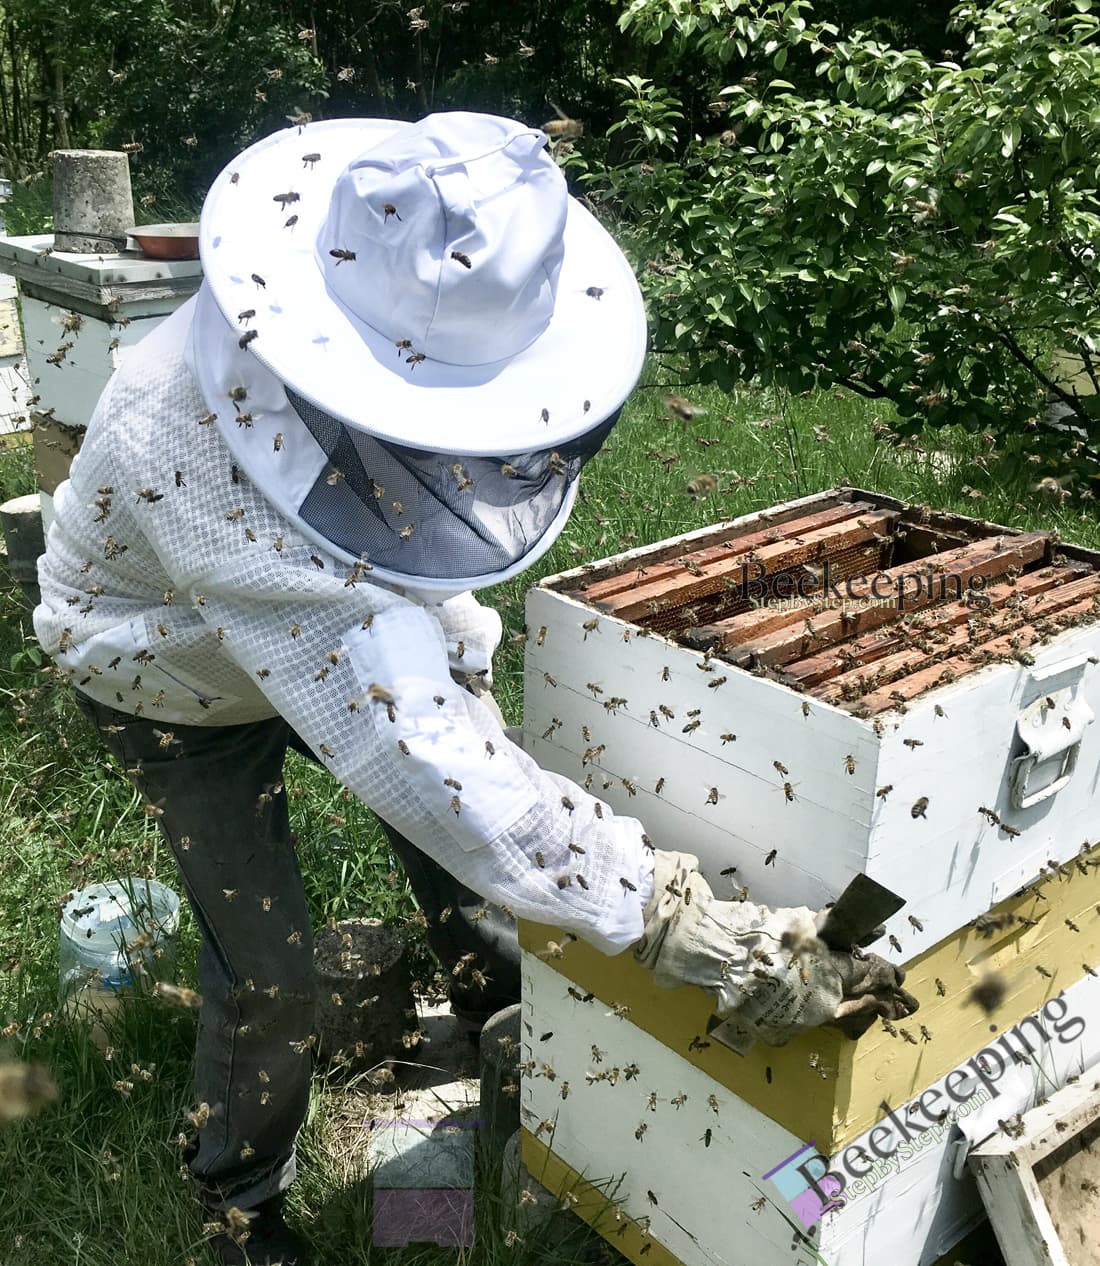 Beekeeper opening the beehive